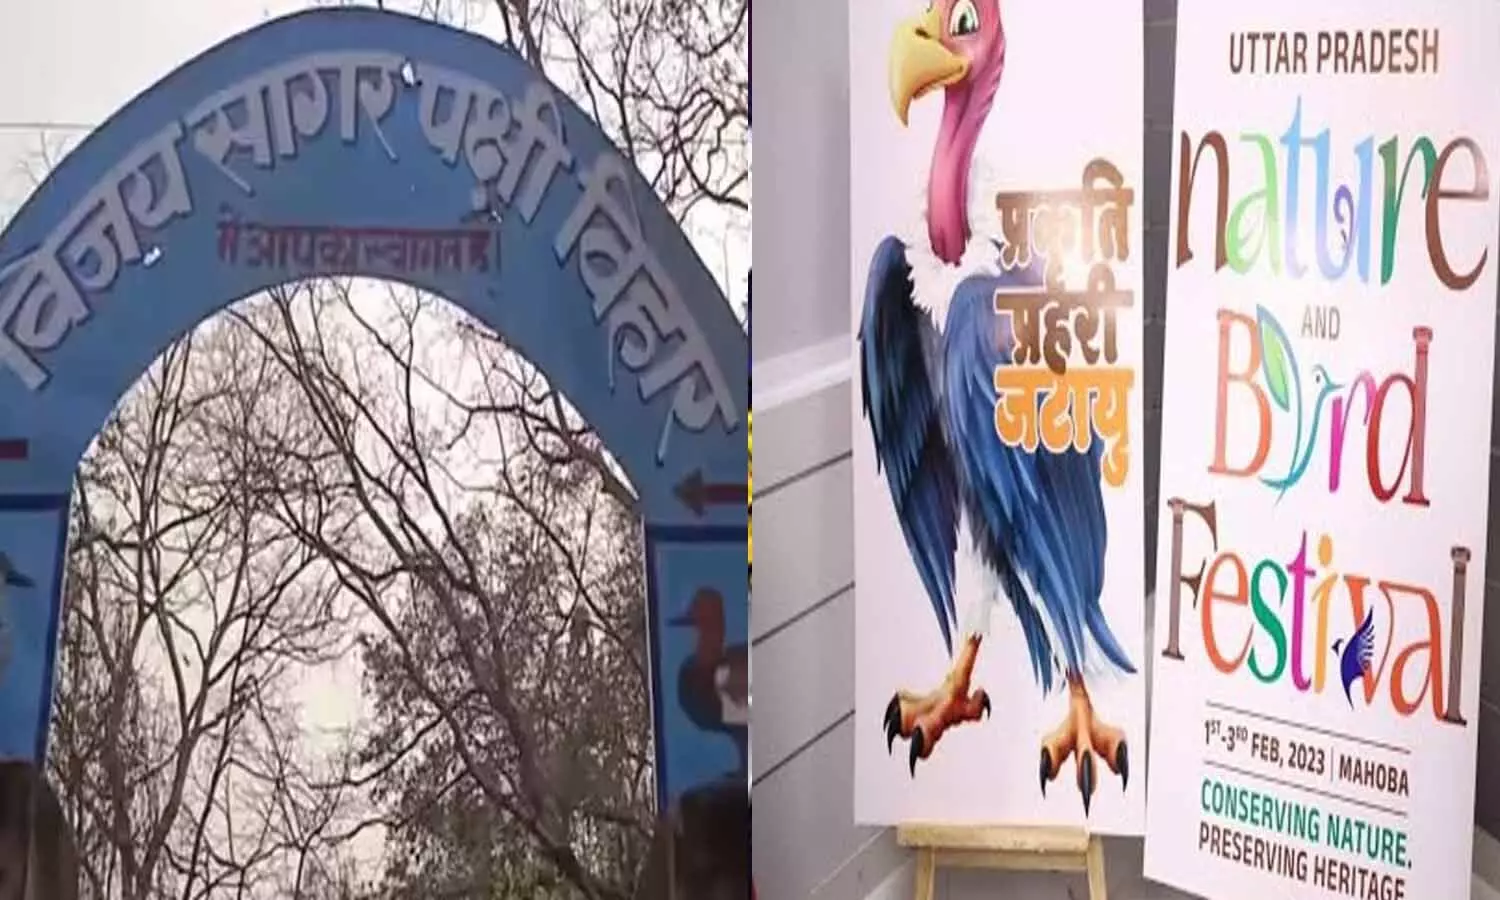 Bird and Nature Festival begins at Vijay Sagar Bird Sanctuary in Mahoba